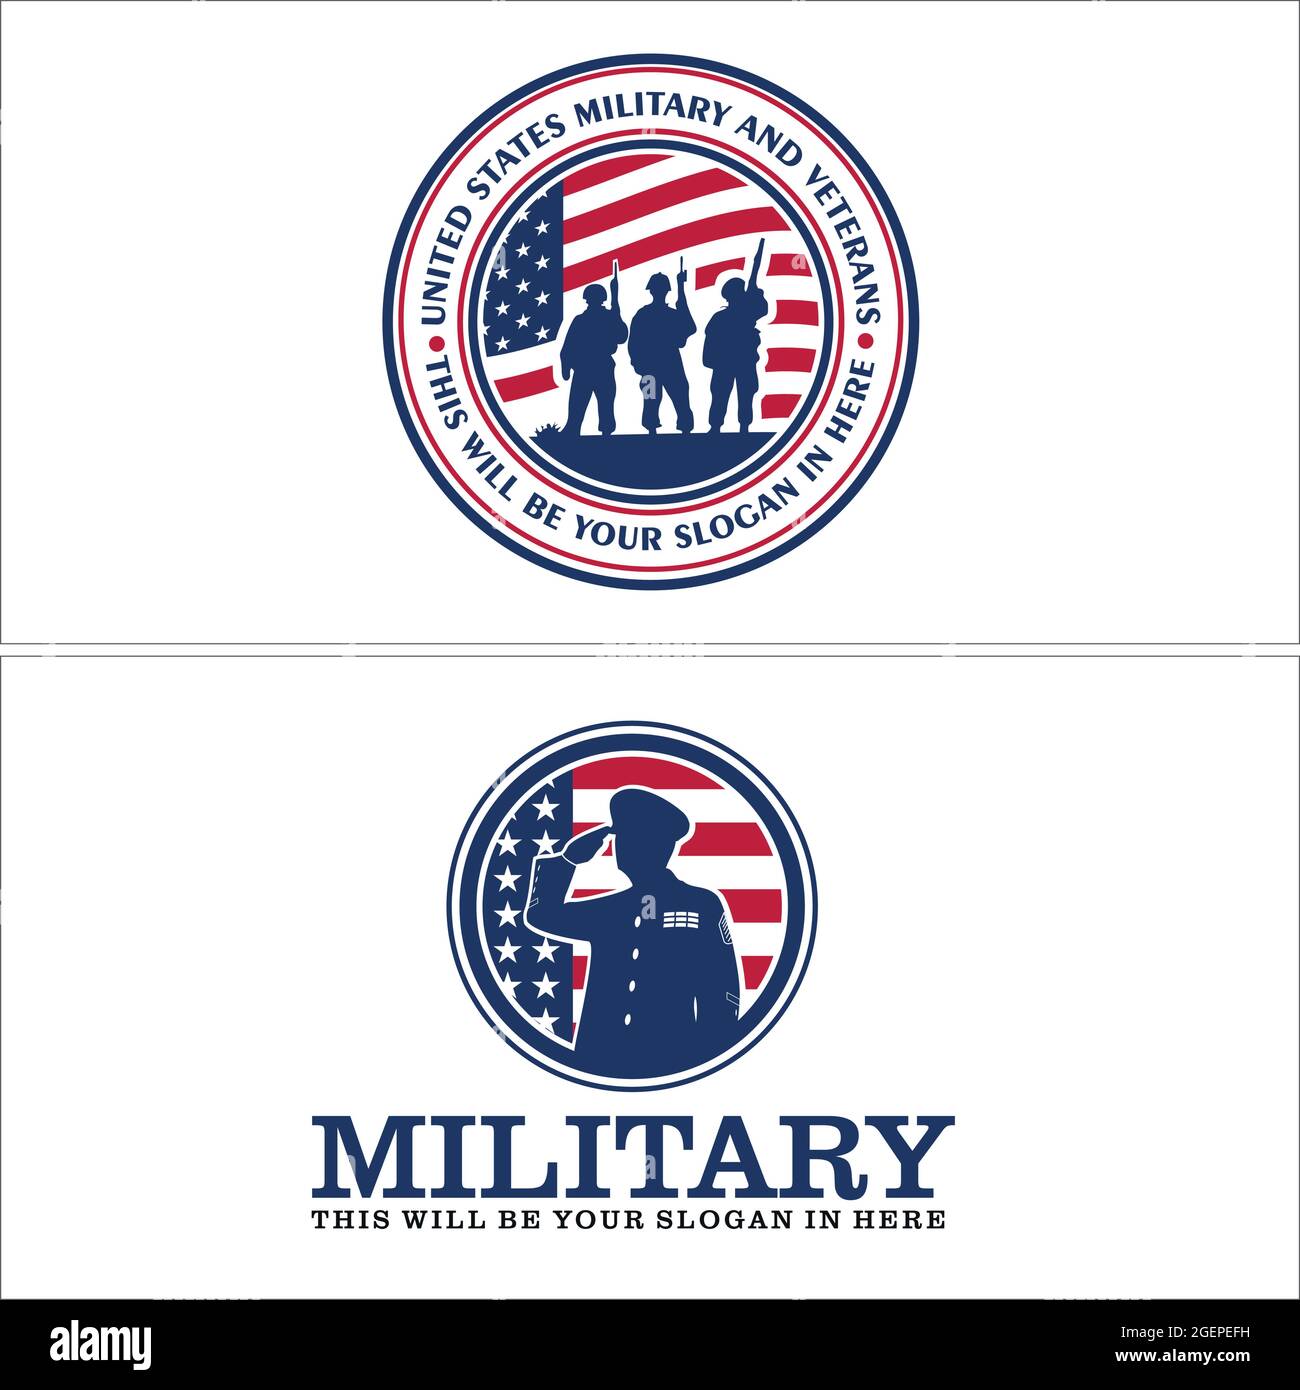 United states military emblem logo design  Stock Vector